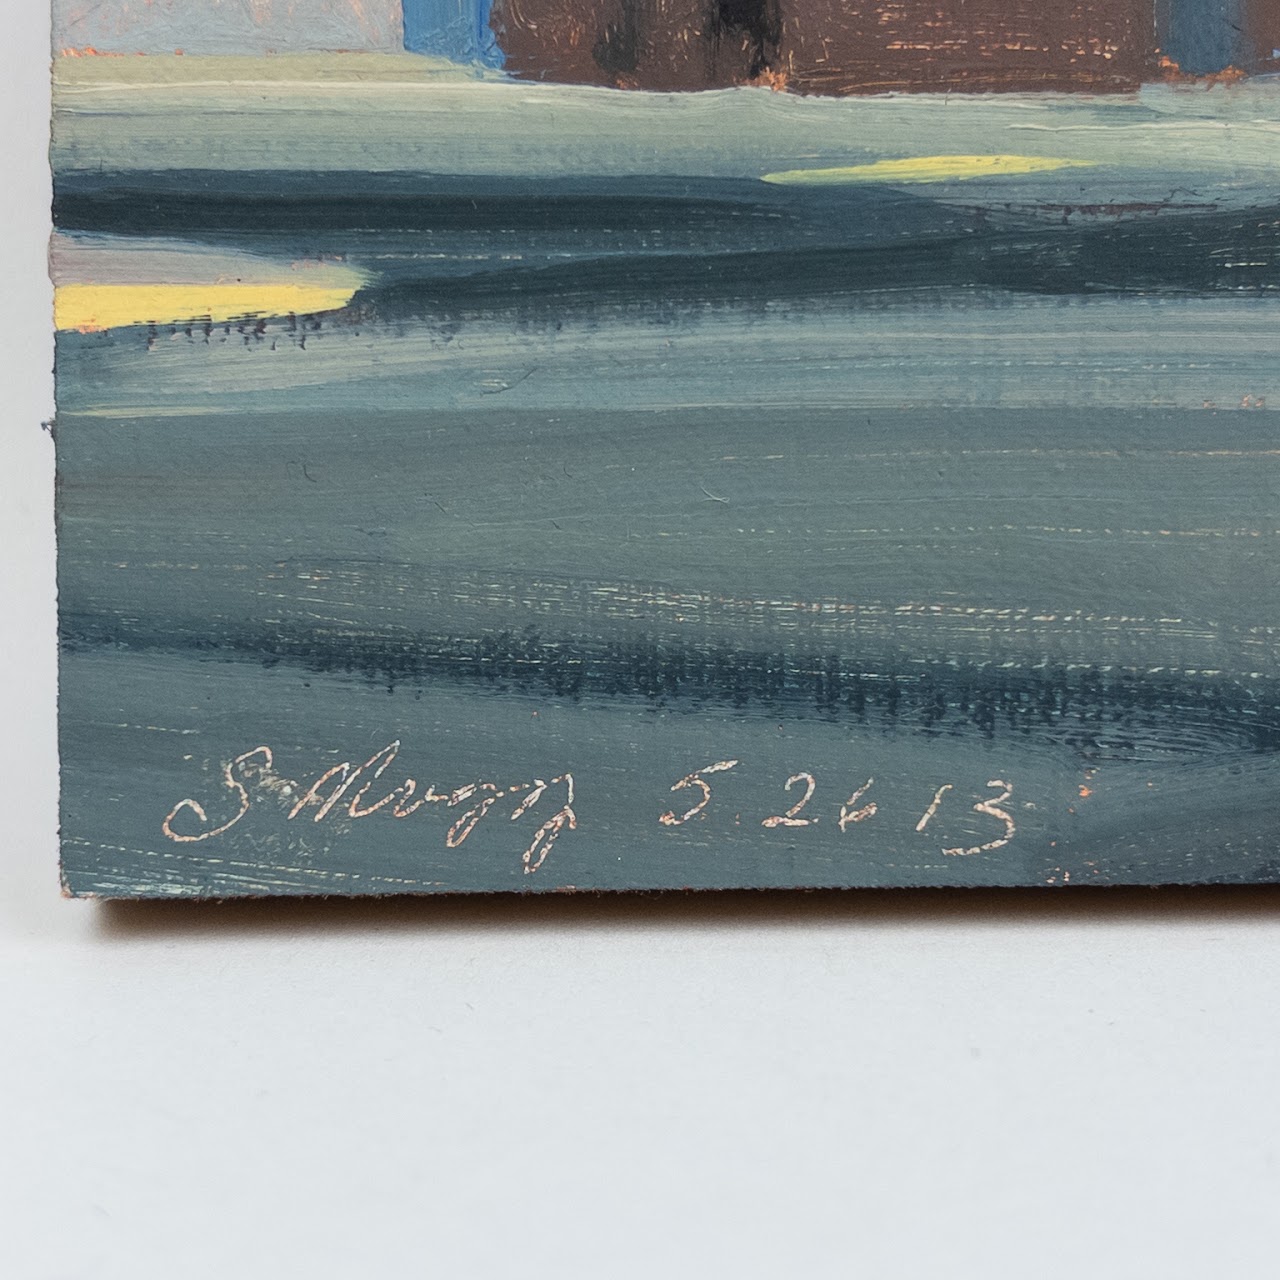 Stephen Magsig "Lumpkin & Geimer" Small Painting